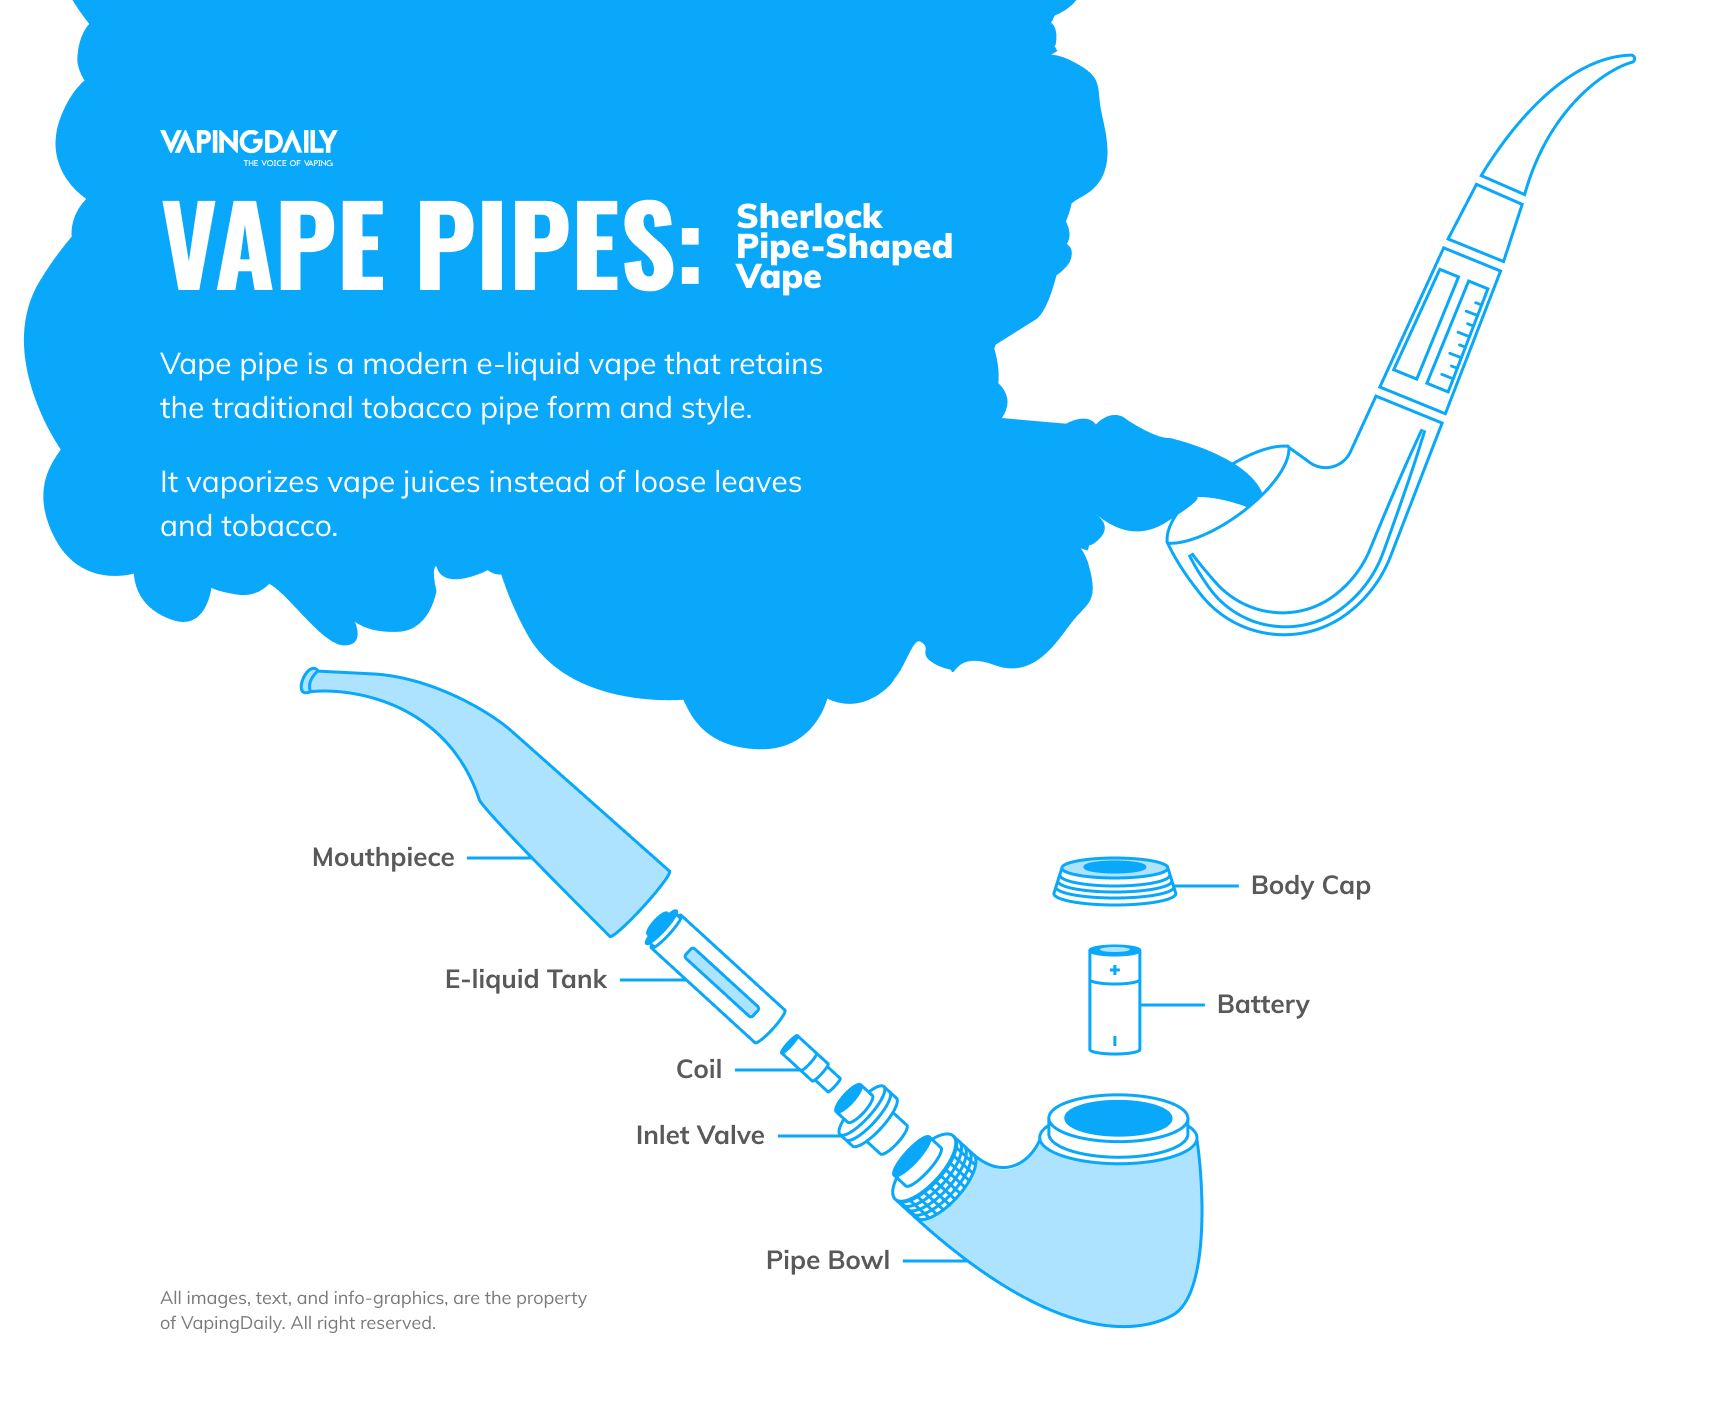 Vape Pipes and sherlock pipe-shaped vapes